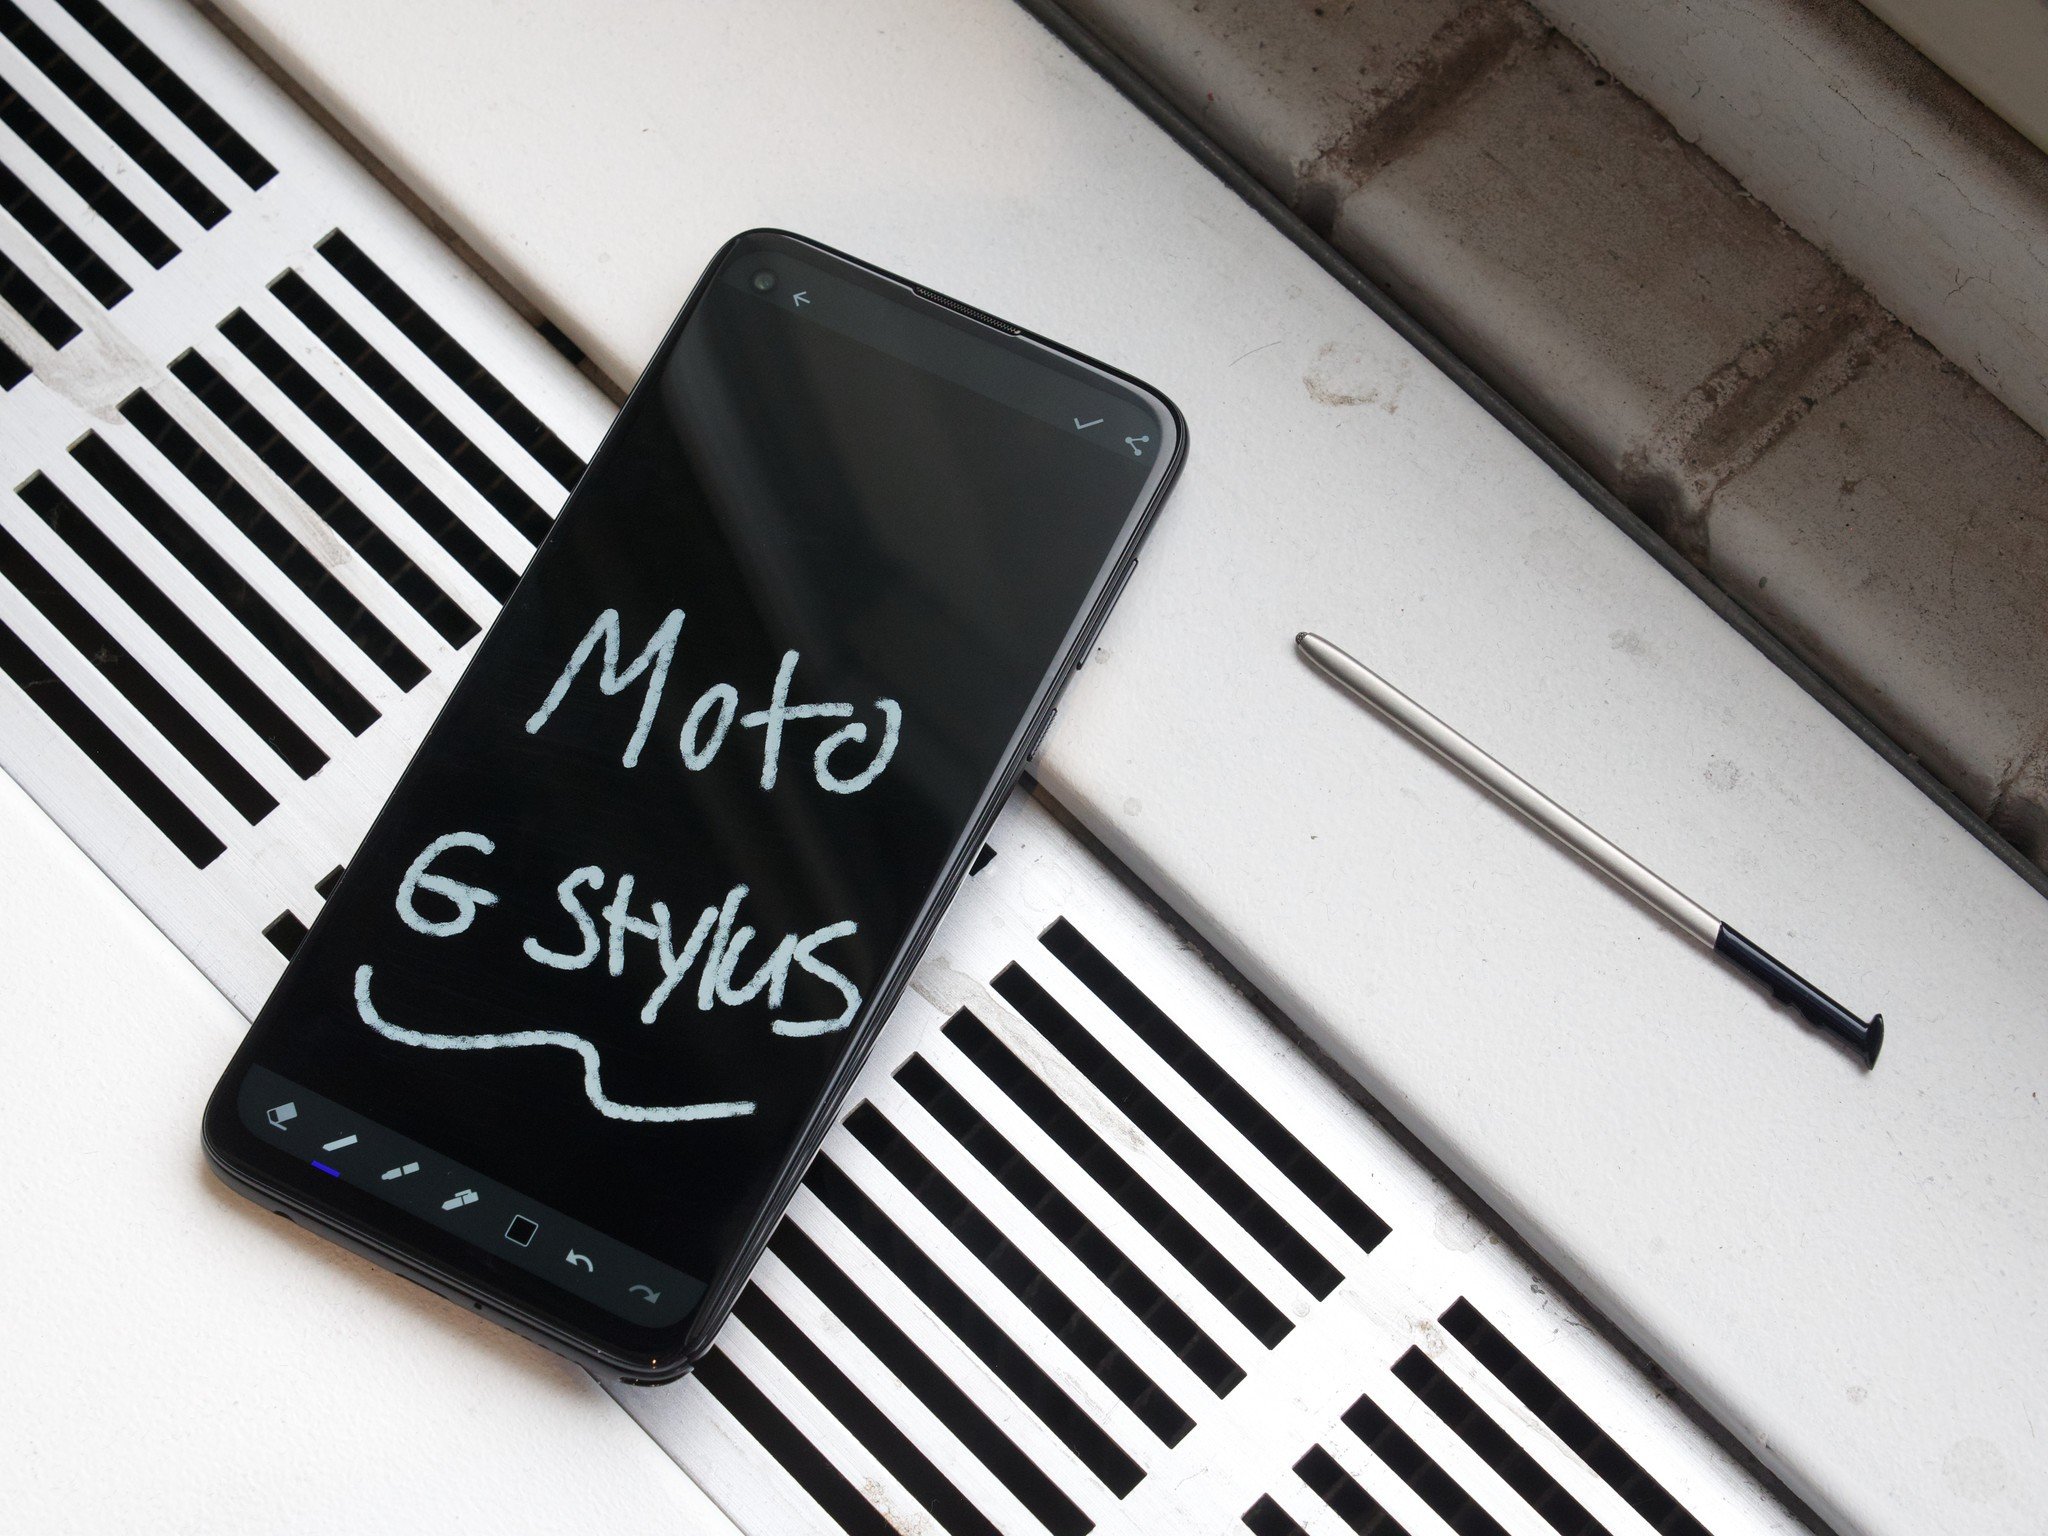 Moto G Stylus 2020 Hands On